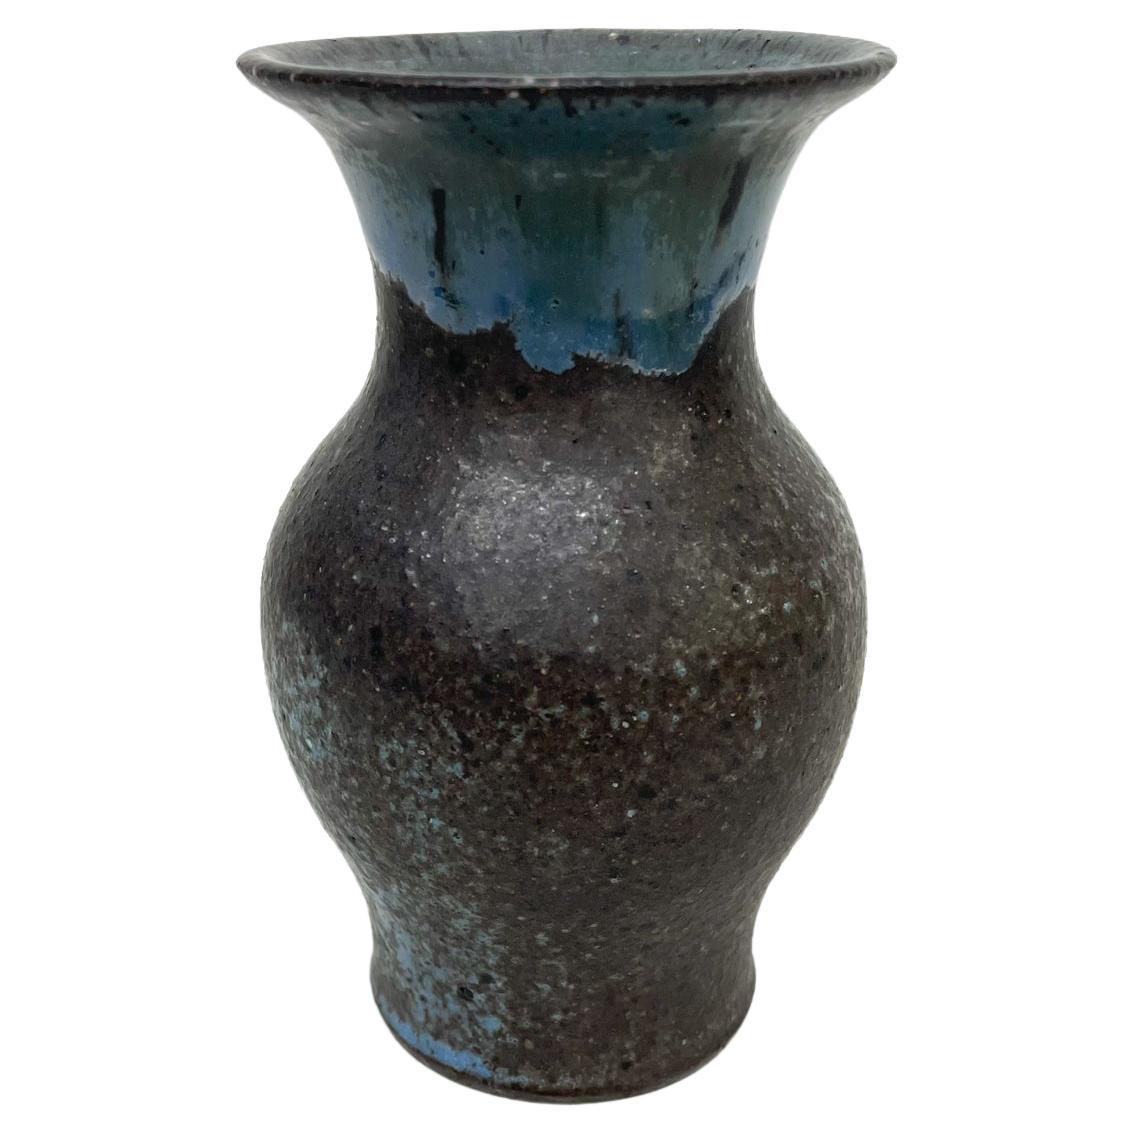 Artful Tiny Weed Pot Bud Vase Draped Blue Glaze on Black 1970s Modern